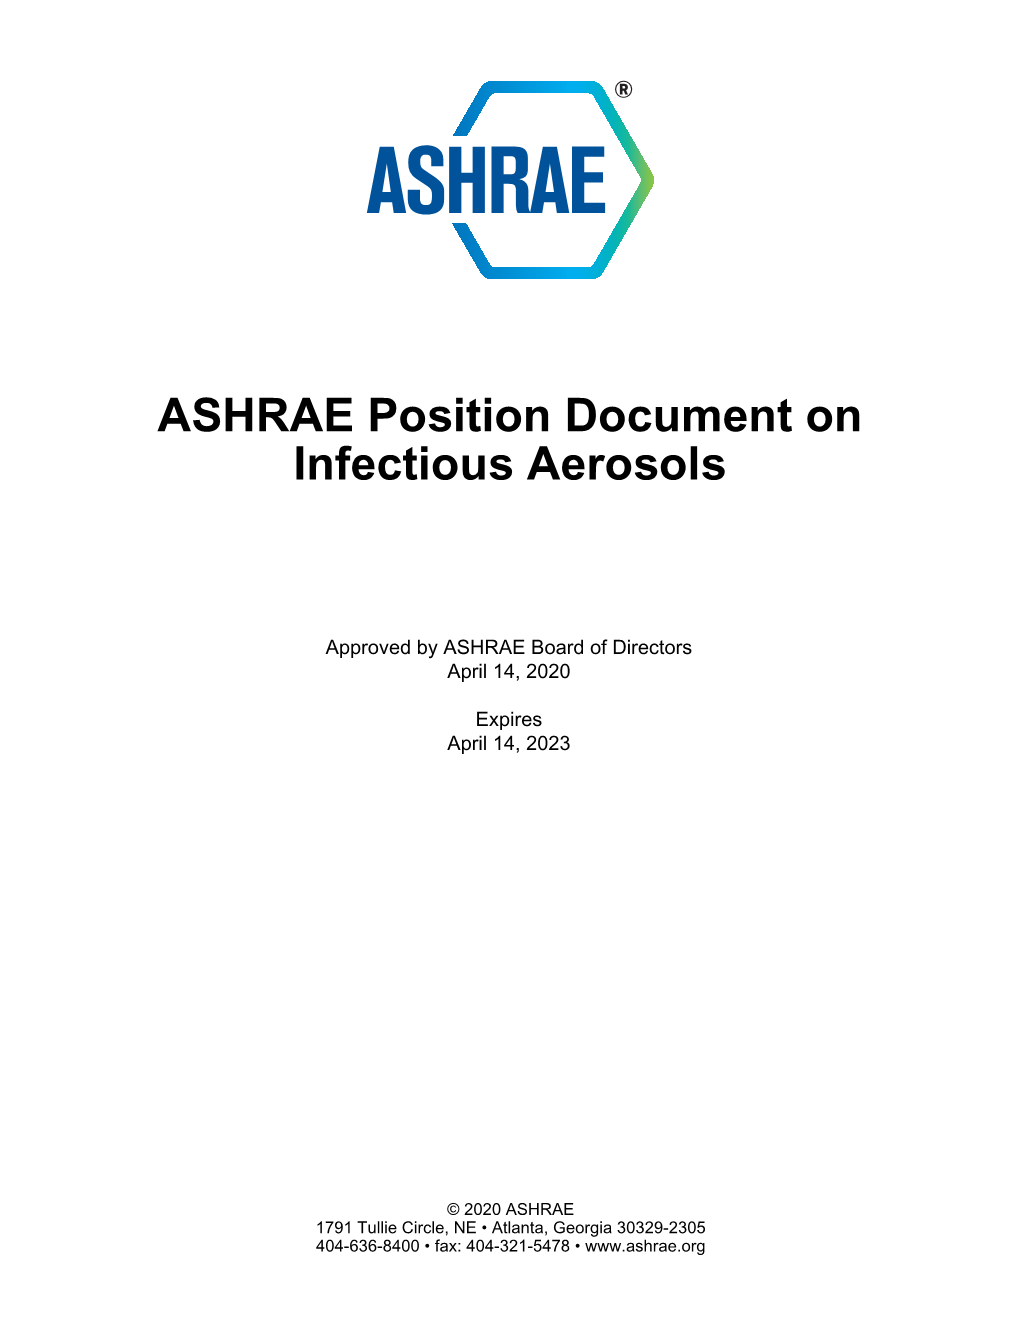 ASHRAE Position Document on Infectious Aerosols